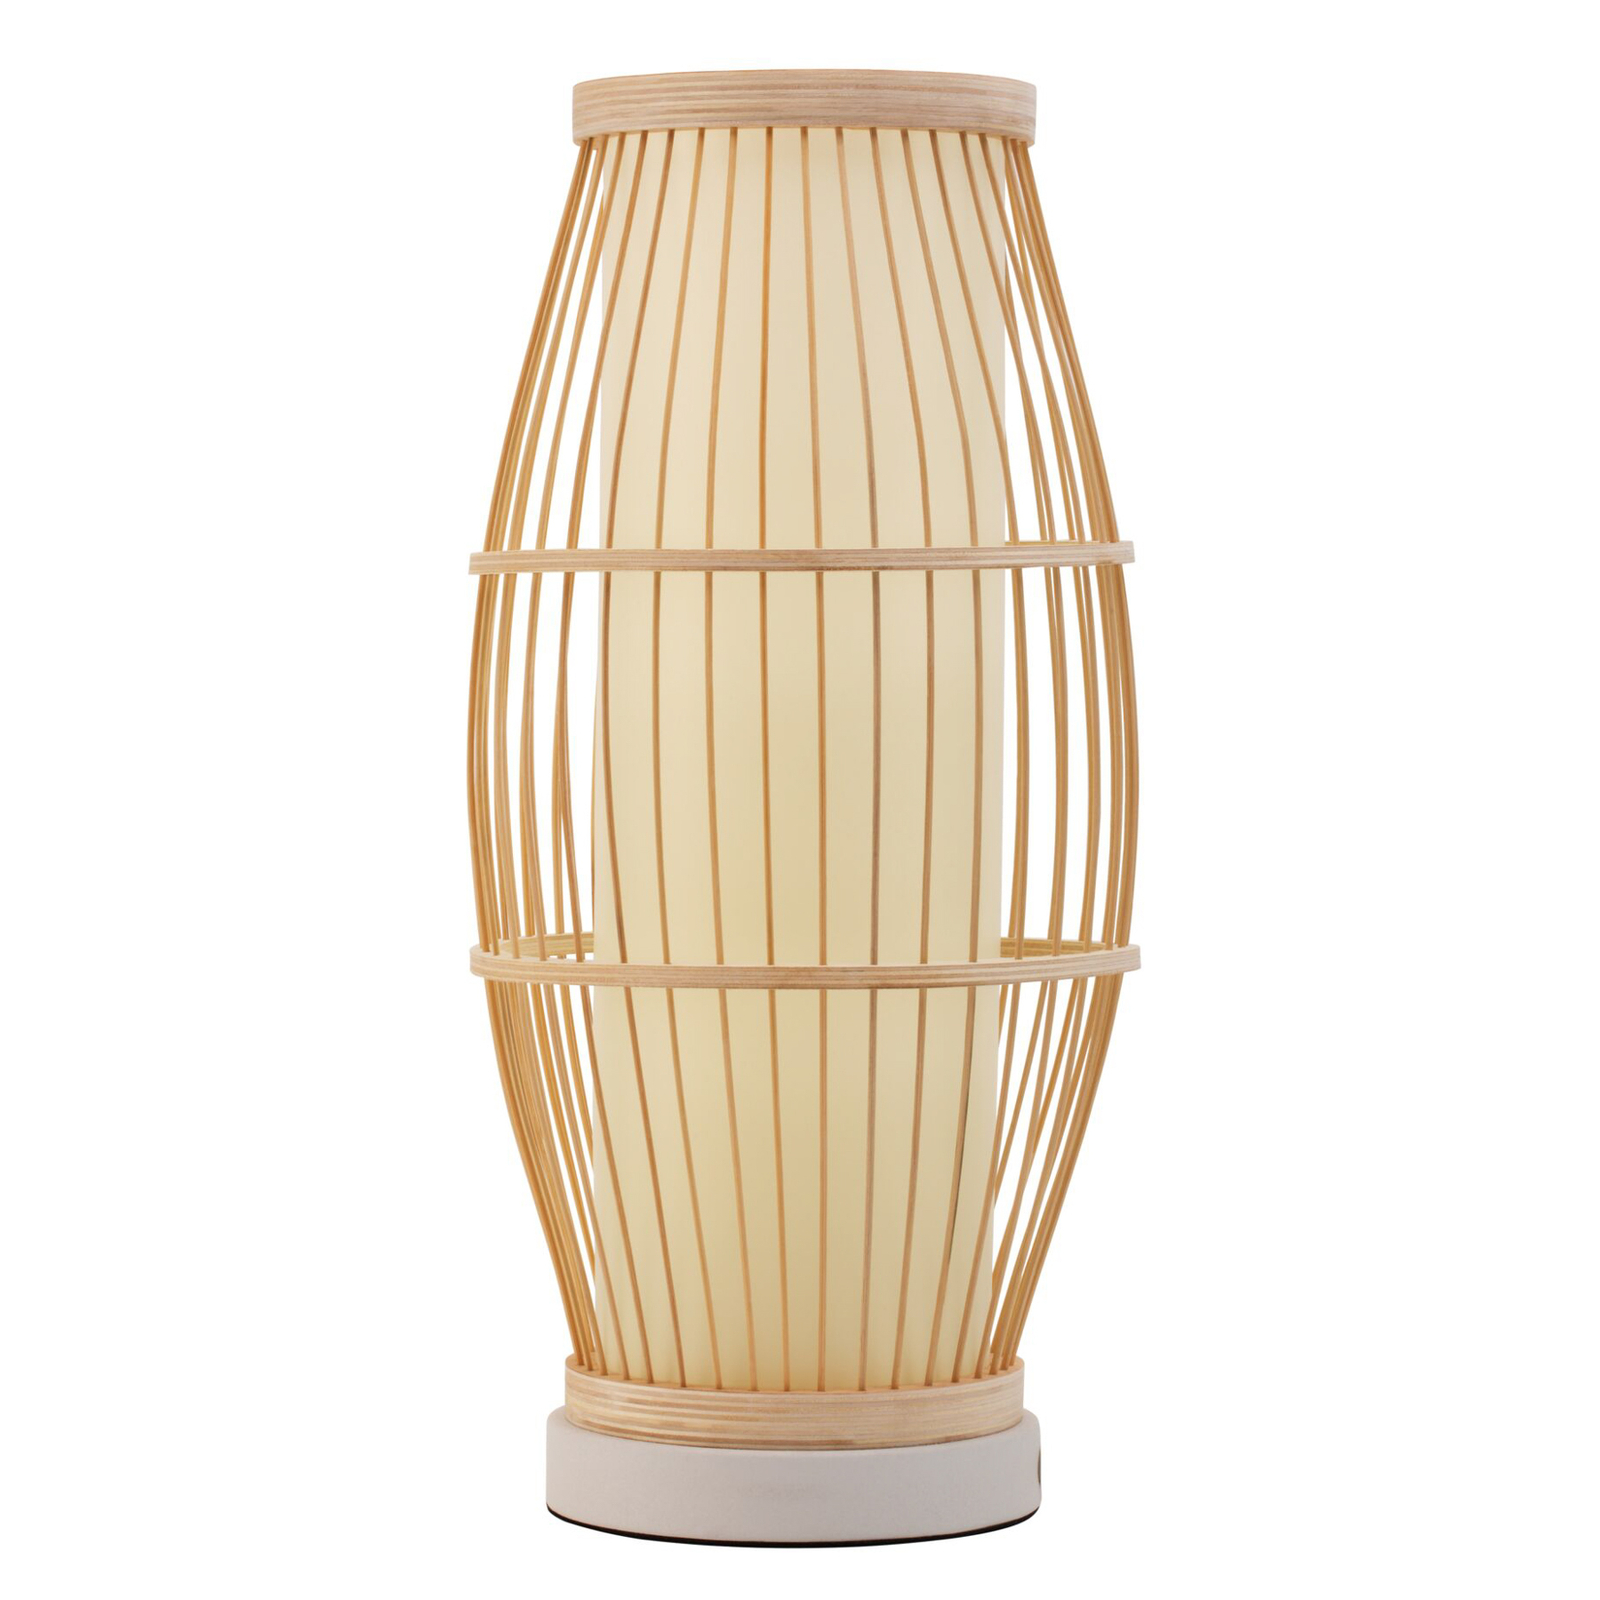 Pauleen Woody Passion bordlampe af bambus